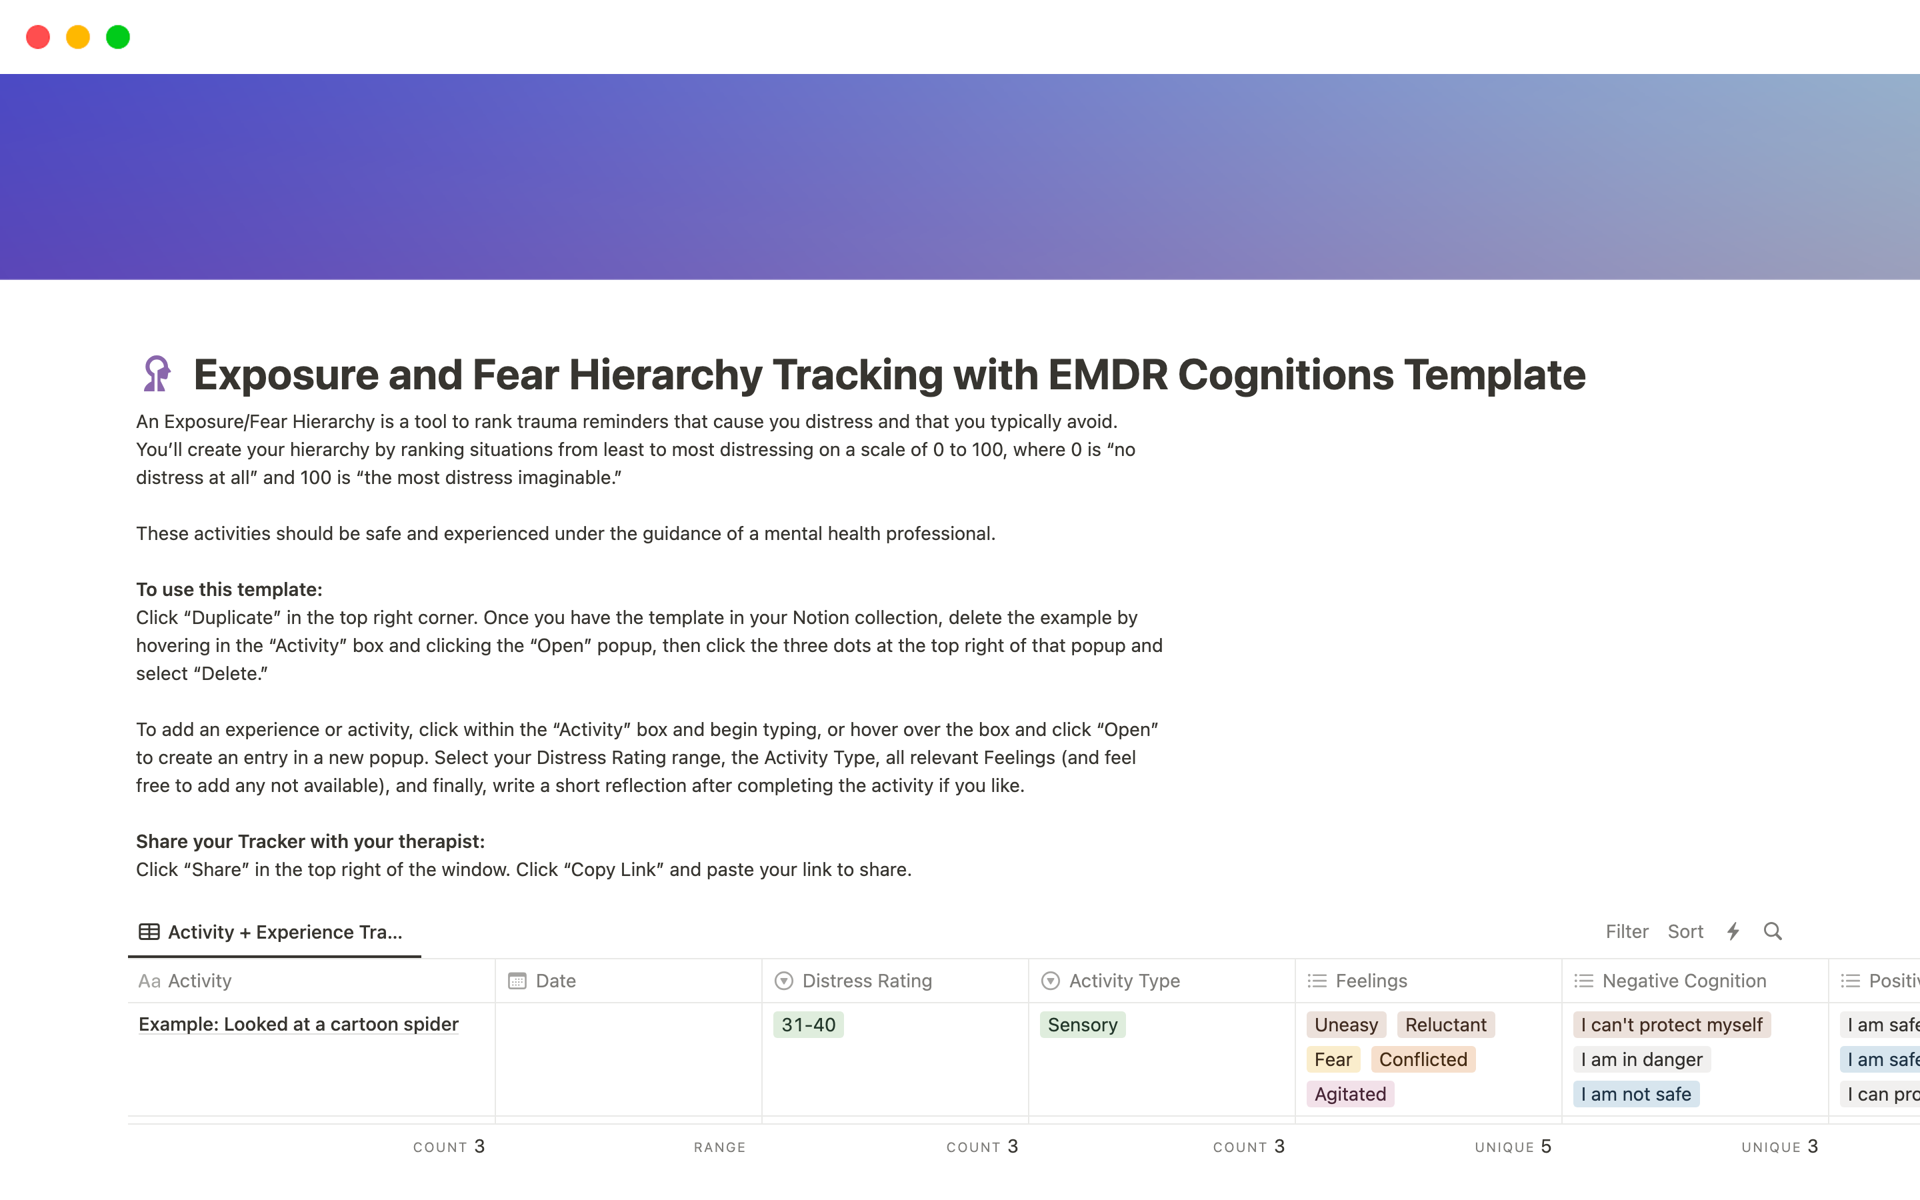 Exposure Hierarchy Tracker with EMDR Cognitions님의 템플릿 미리보기